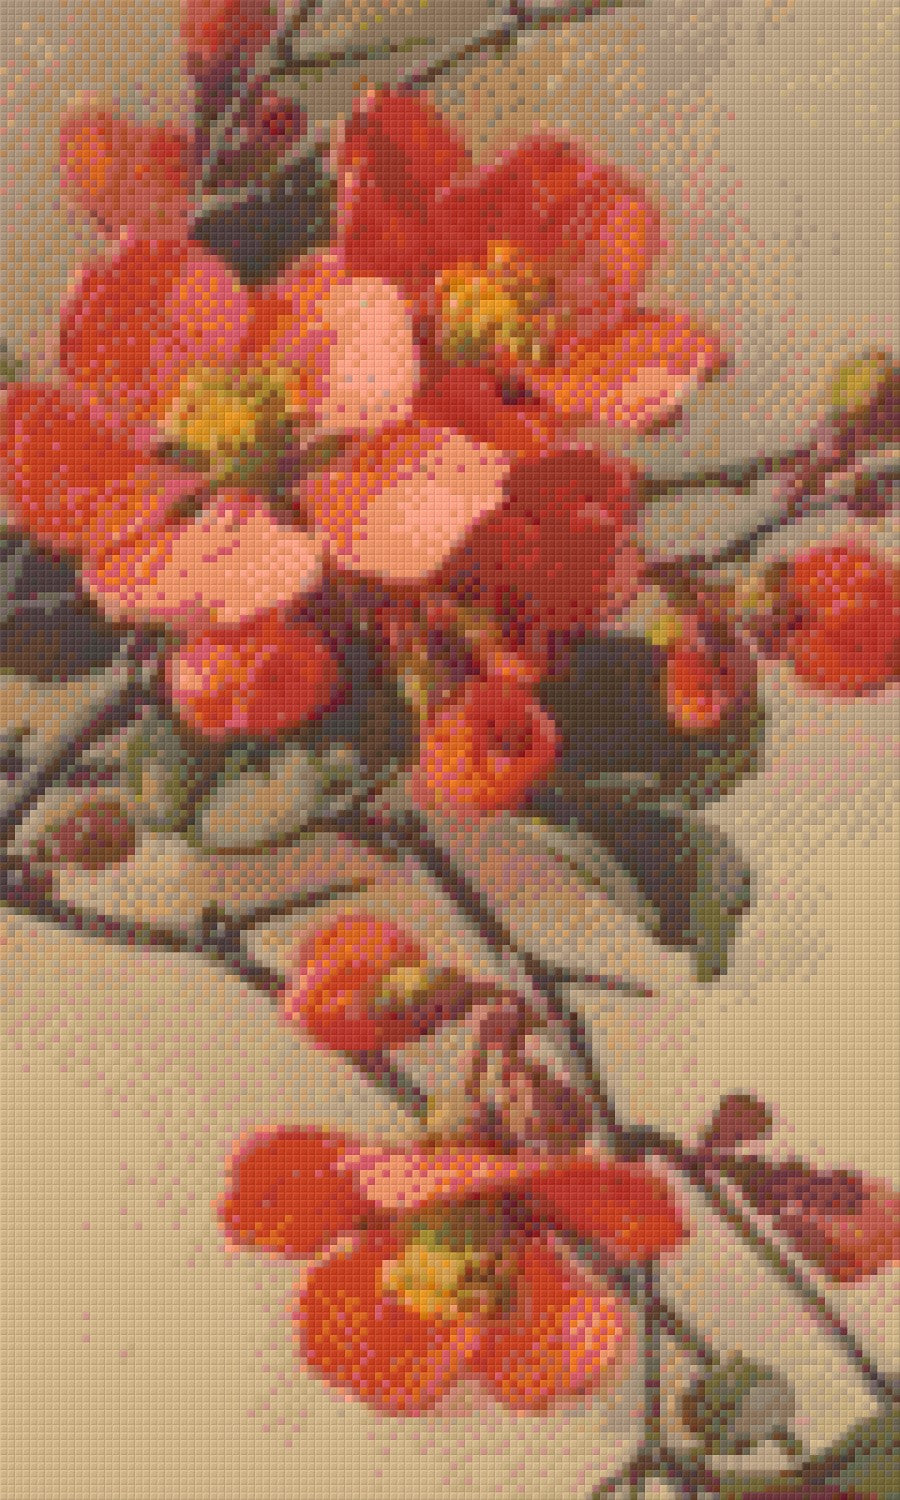 Pixelhobby classic set - flower branch in red